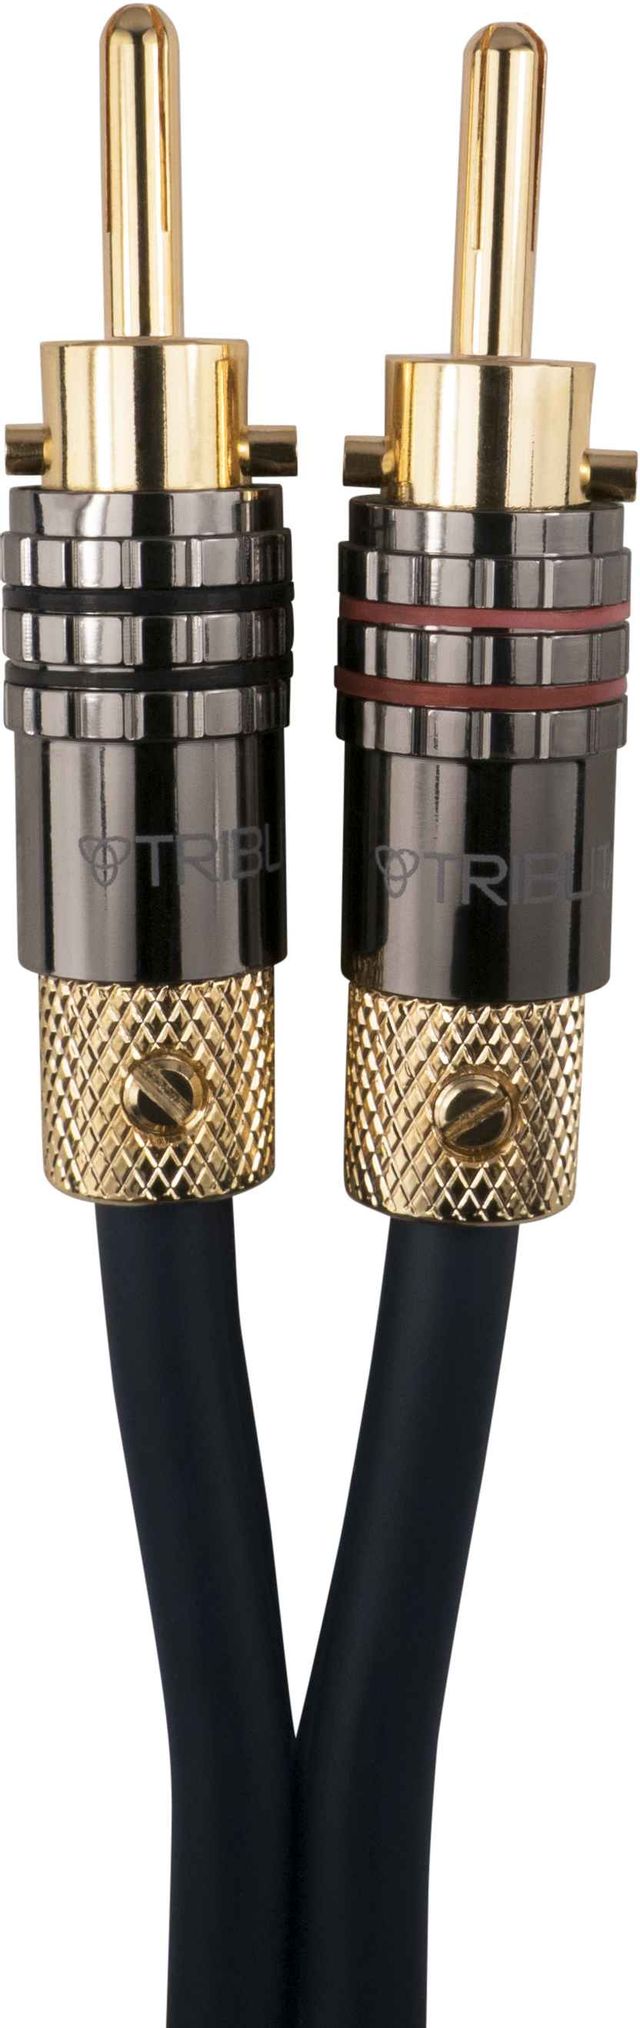 Tributaries® Series 8 10 Ft. Banana Plugs Speaker Cable 0